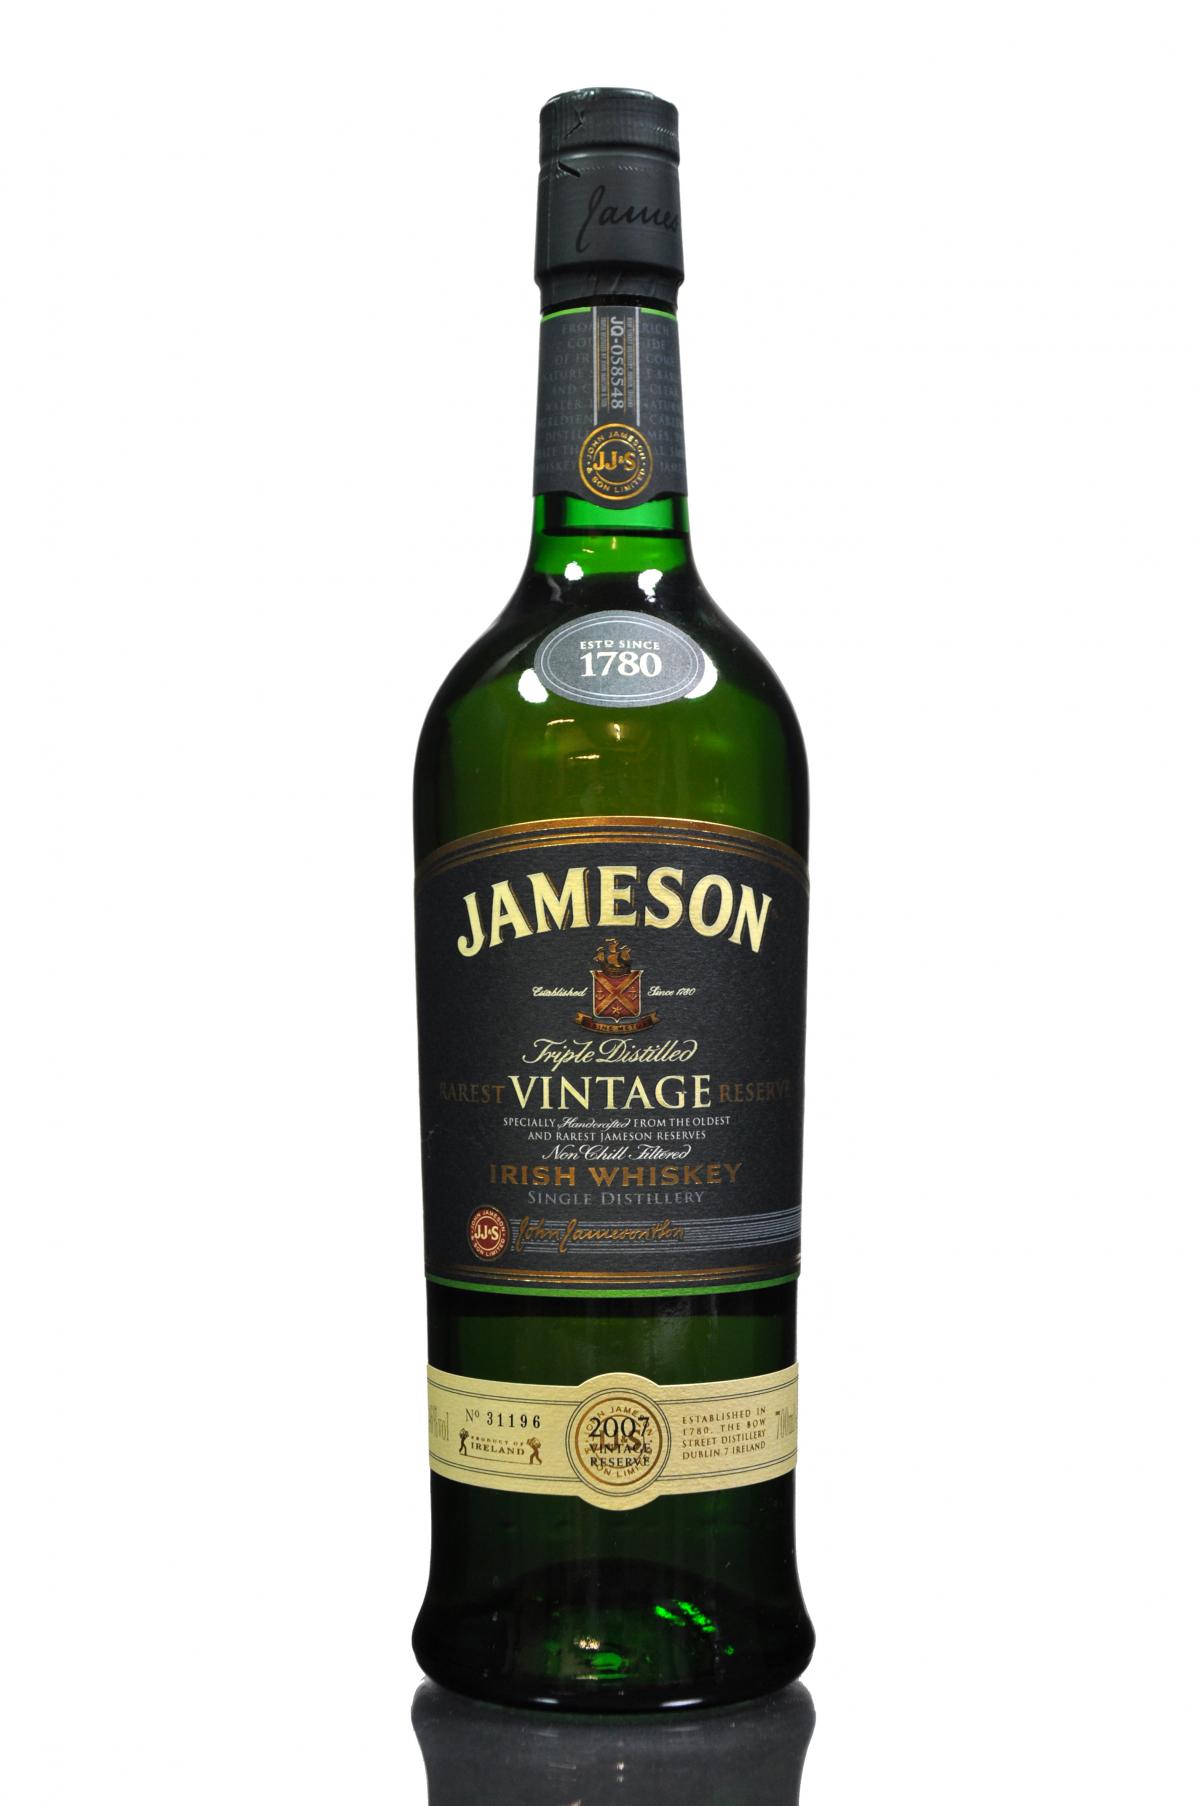 Jameson Irish Whiskey - Vintage Reserve